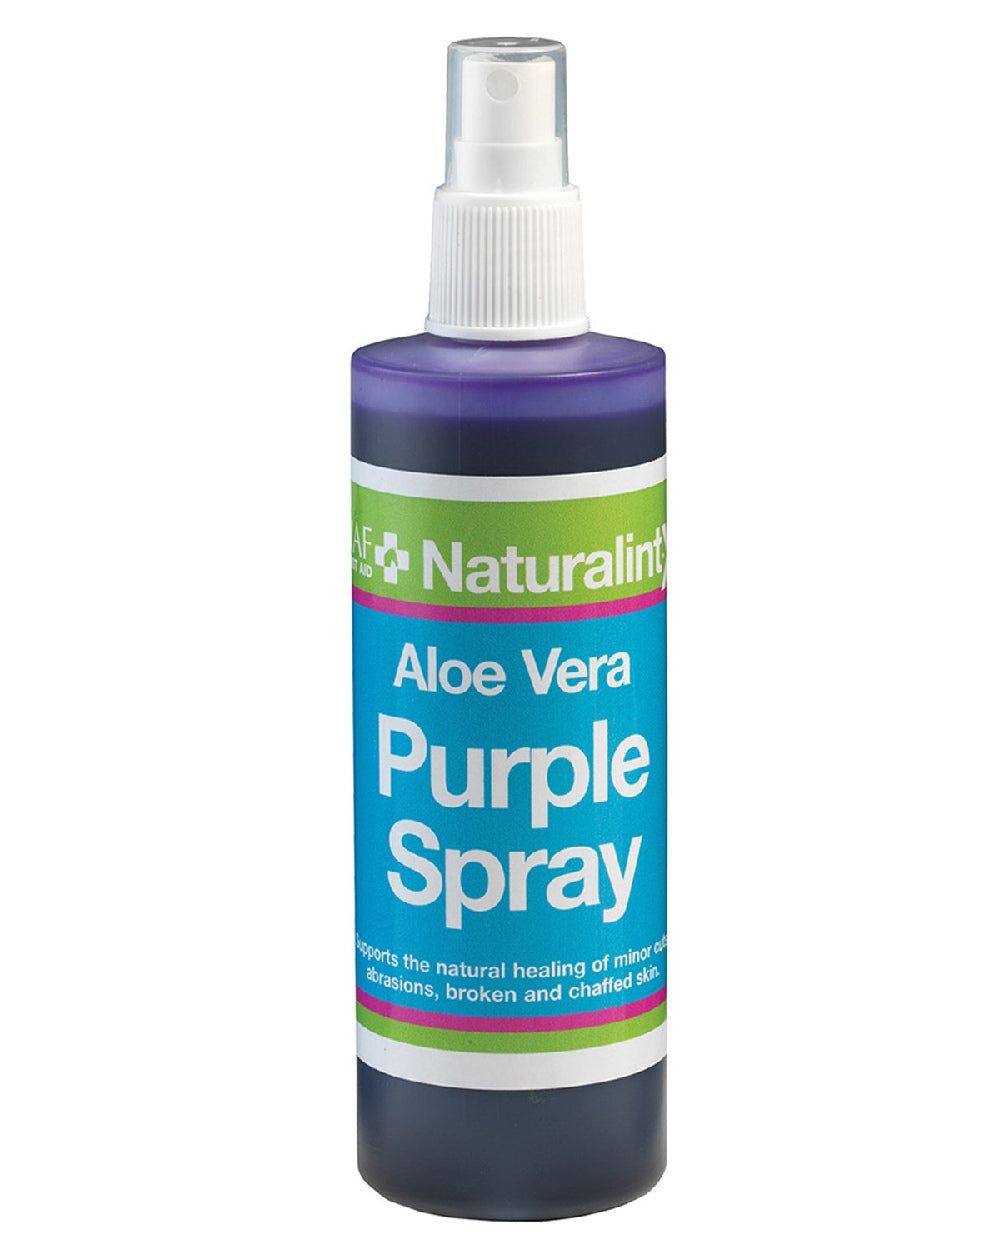 NAF Naturalintx Aloe Vera Purple Spray 240ml on white background